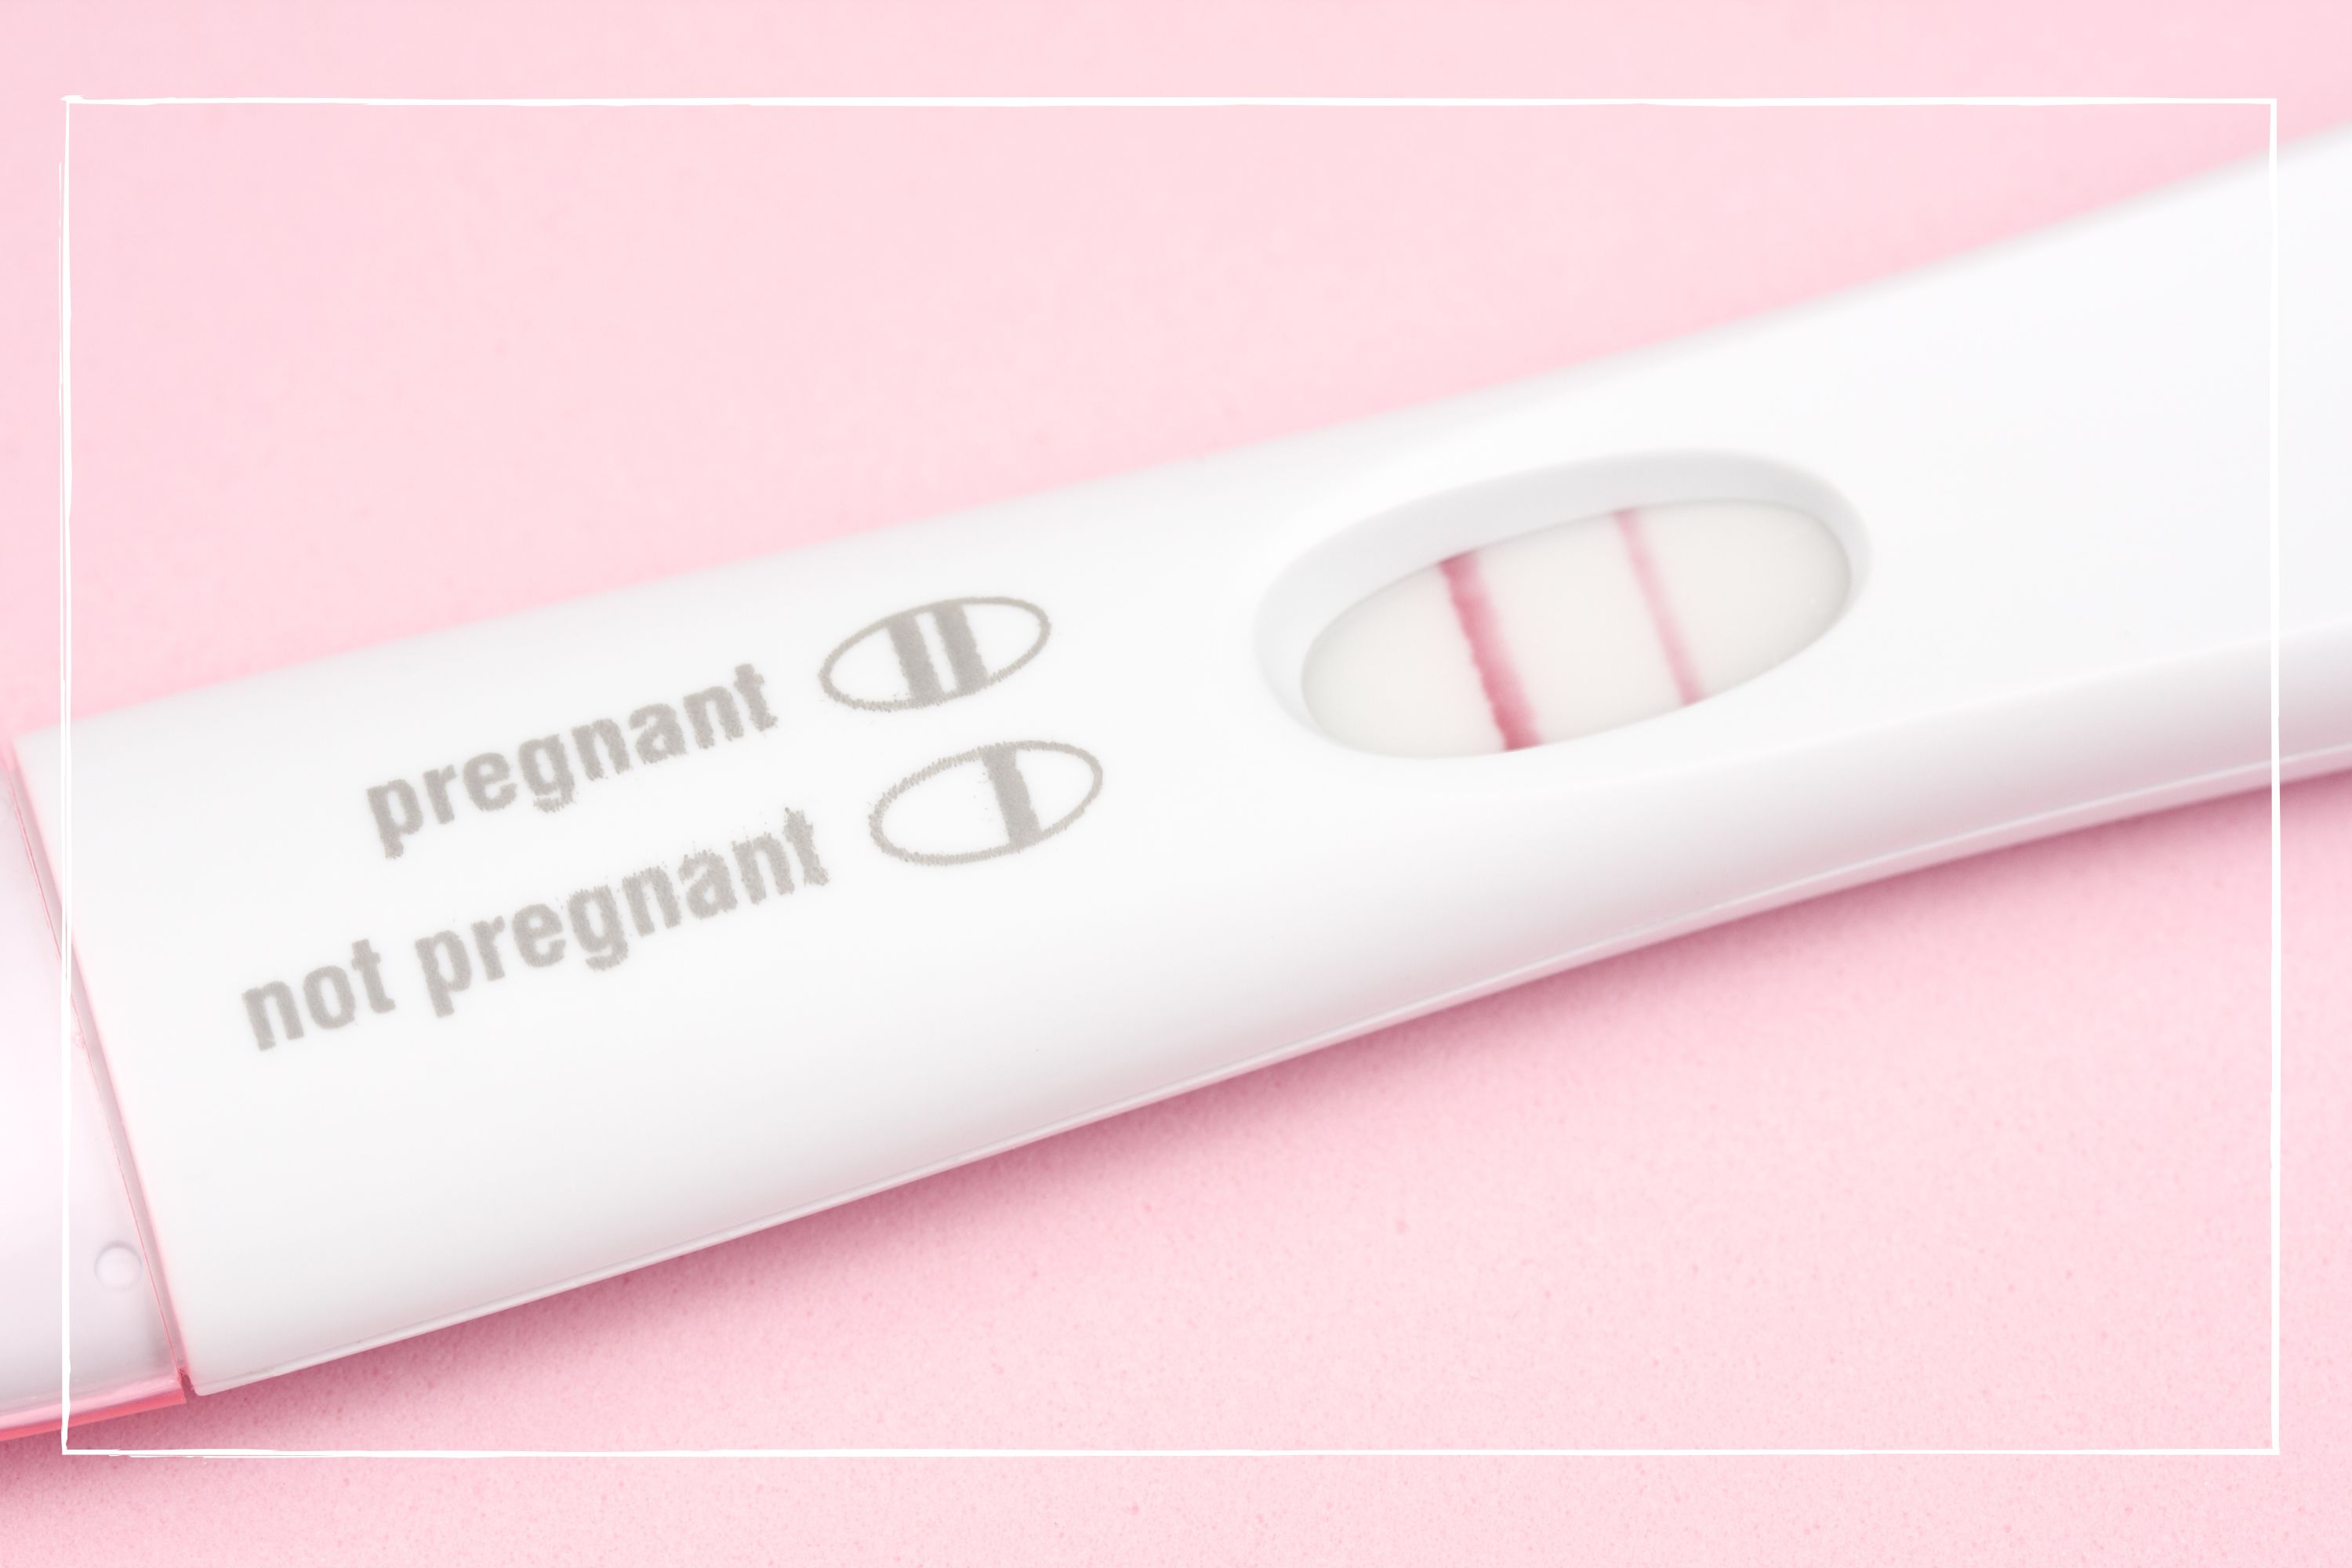 Pregnant Test